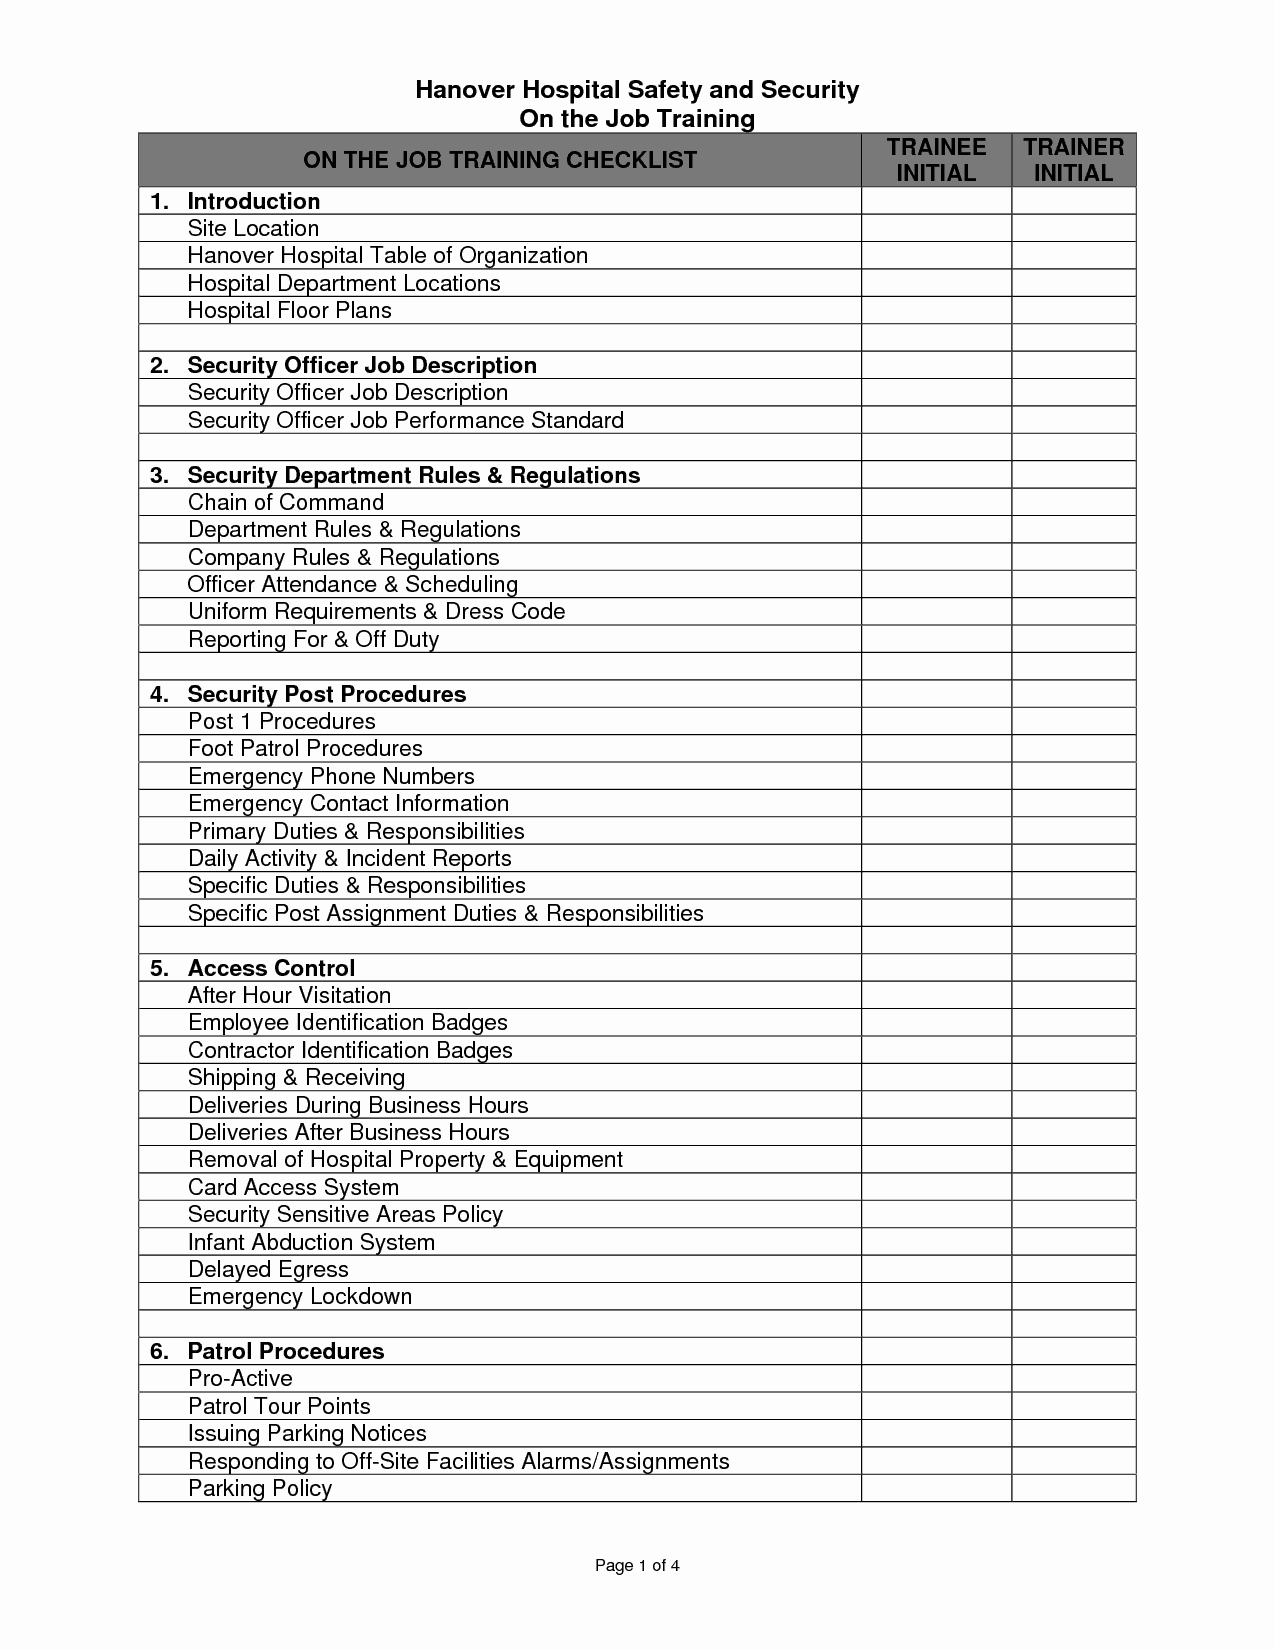 Training Checklist Template Excel Free Fresh Training Checklist Templates Word Excel Fomats